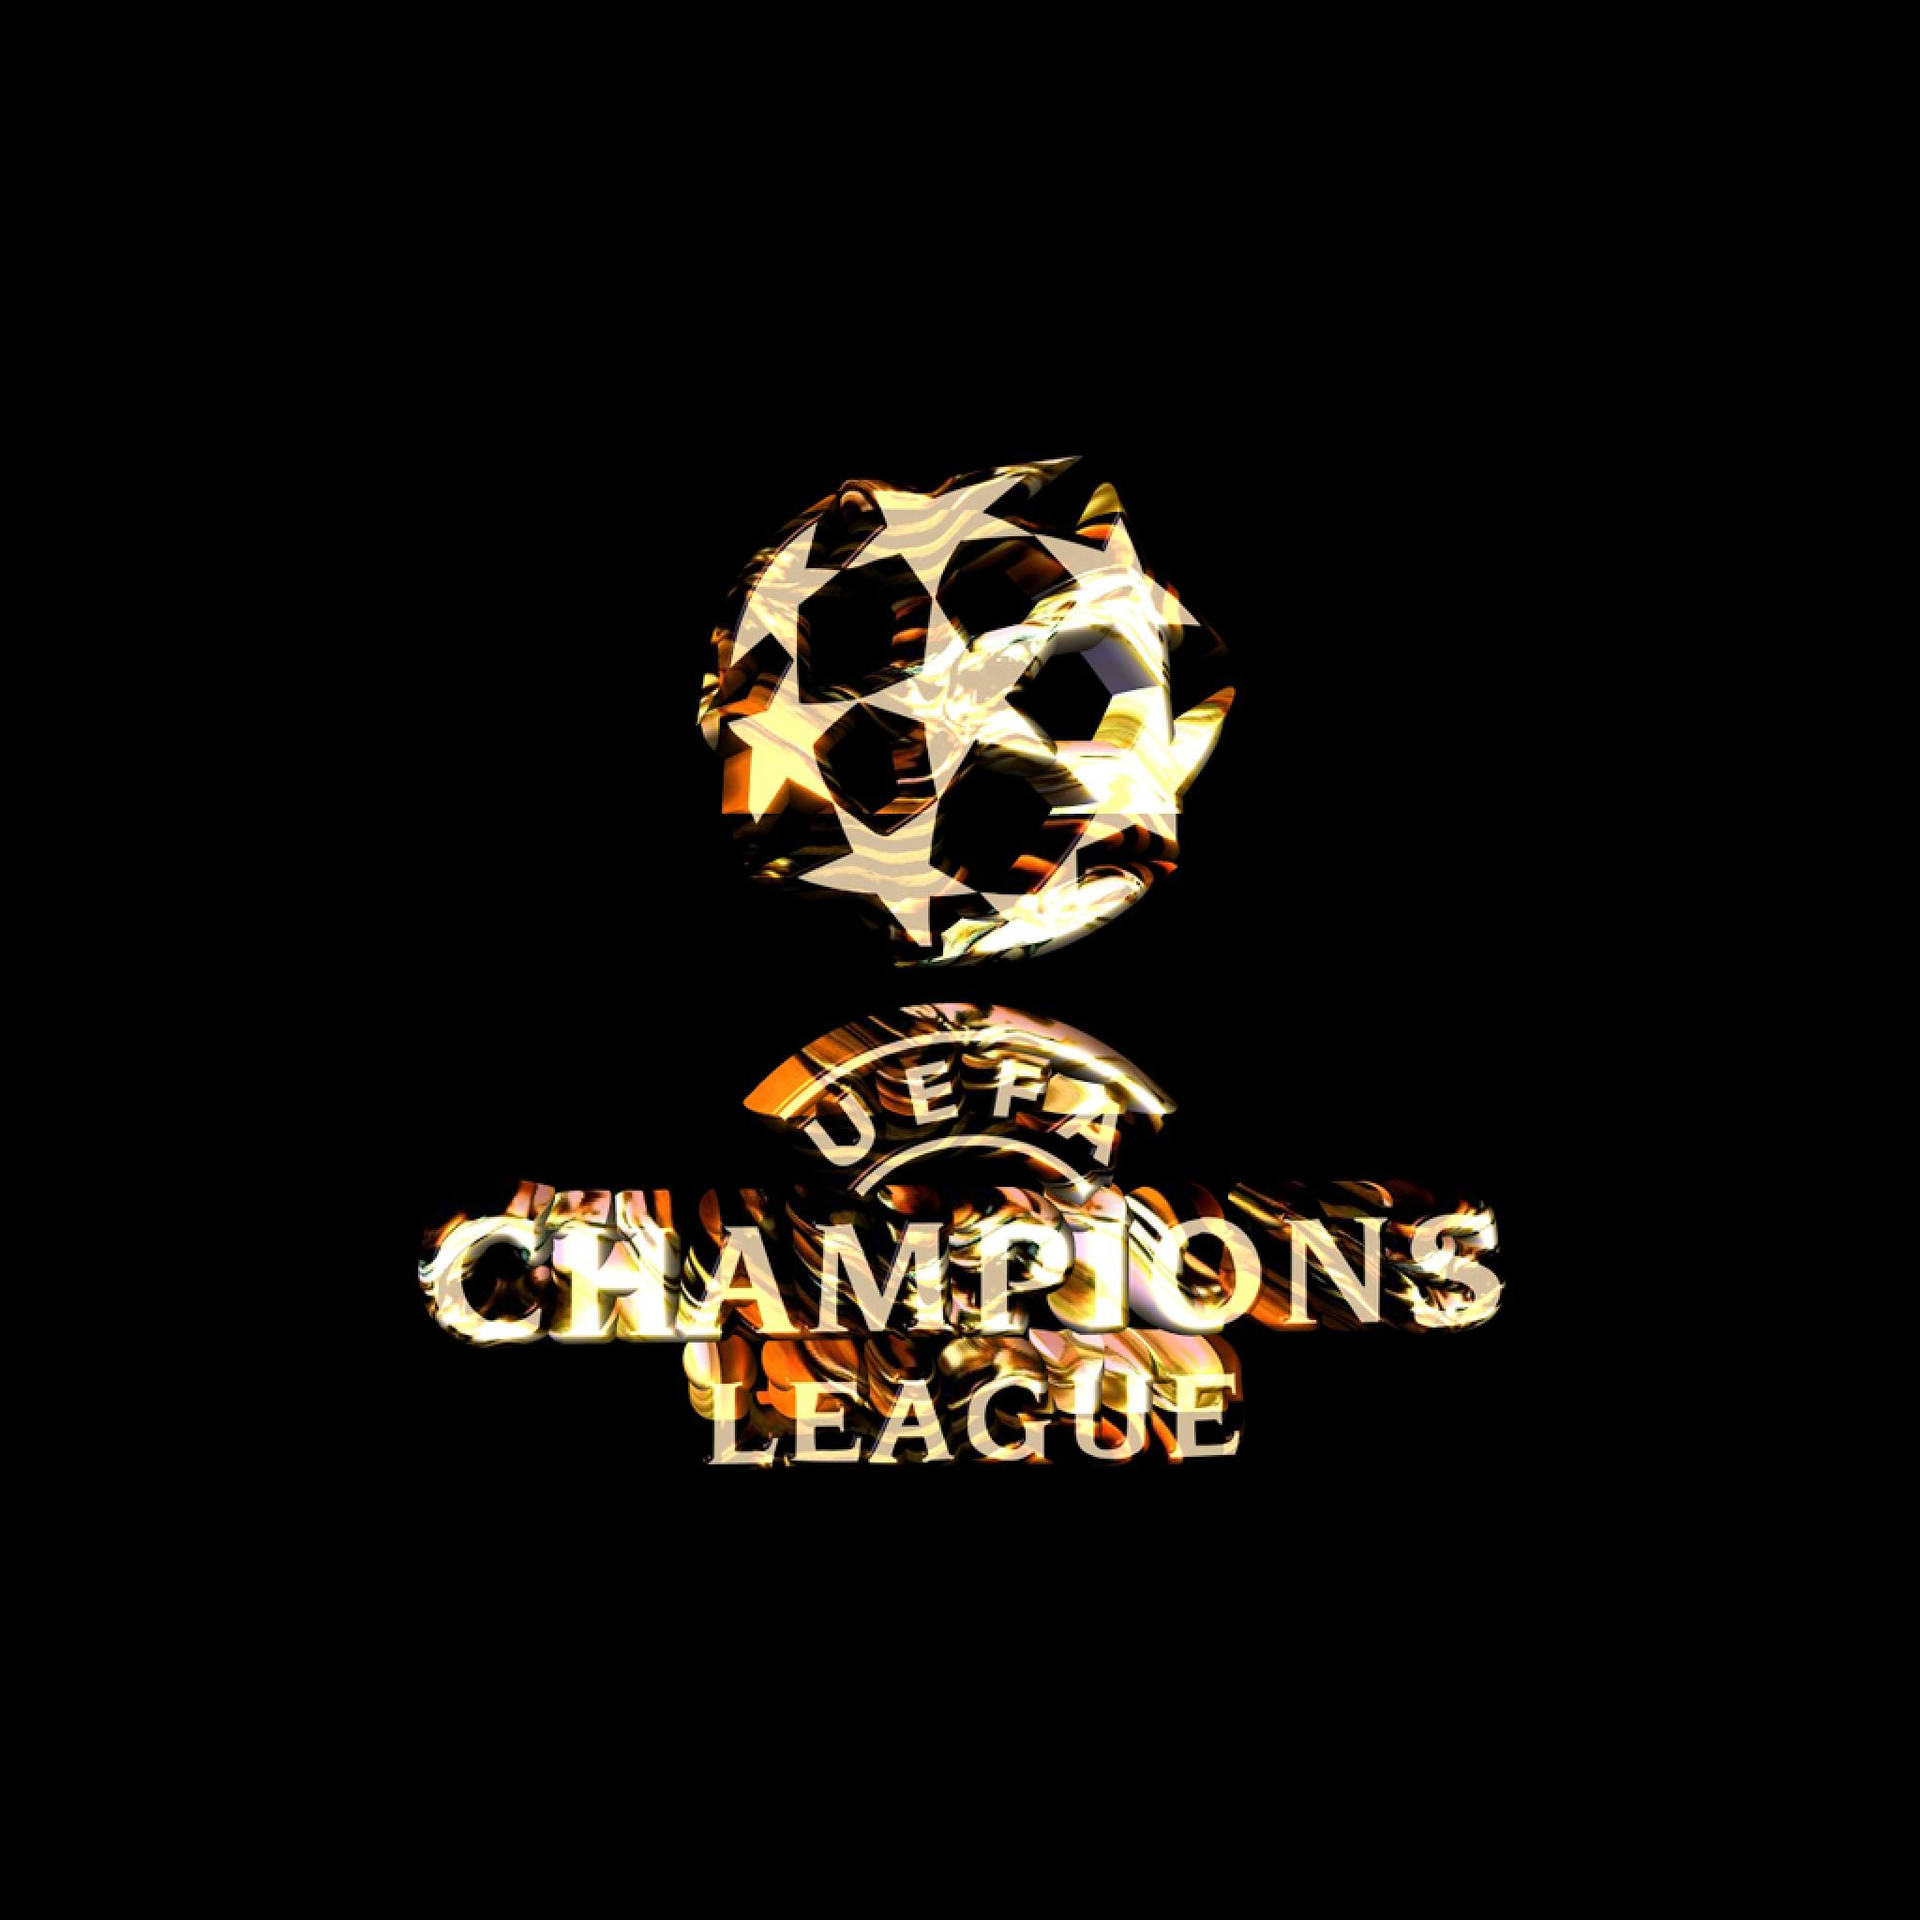 UEFA Champions League Gold Logo Wallpaper